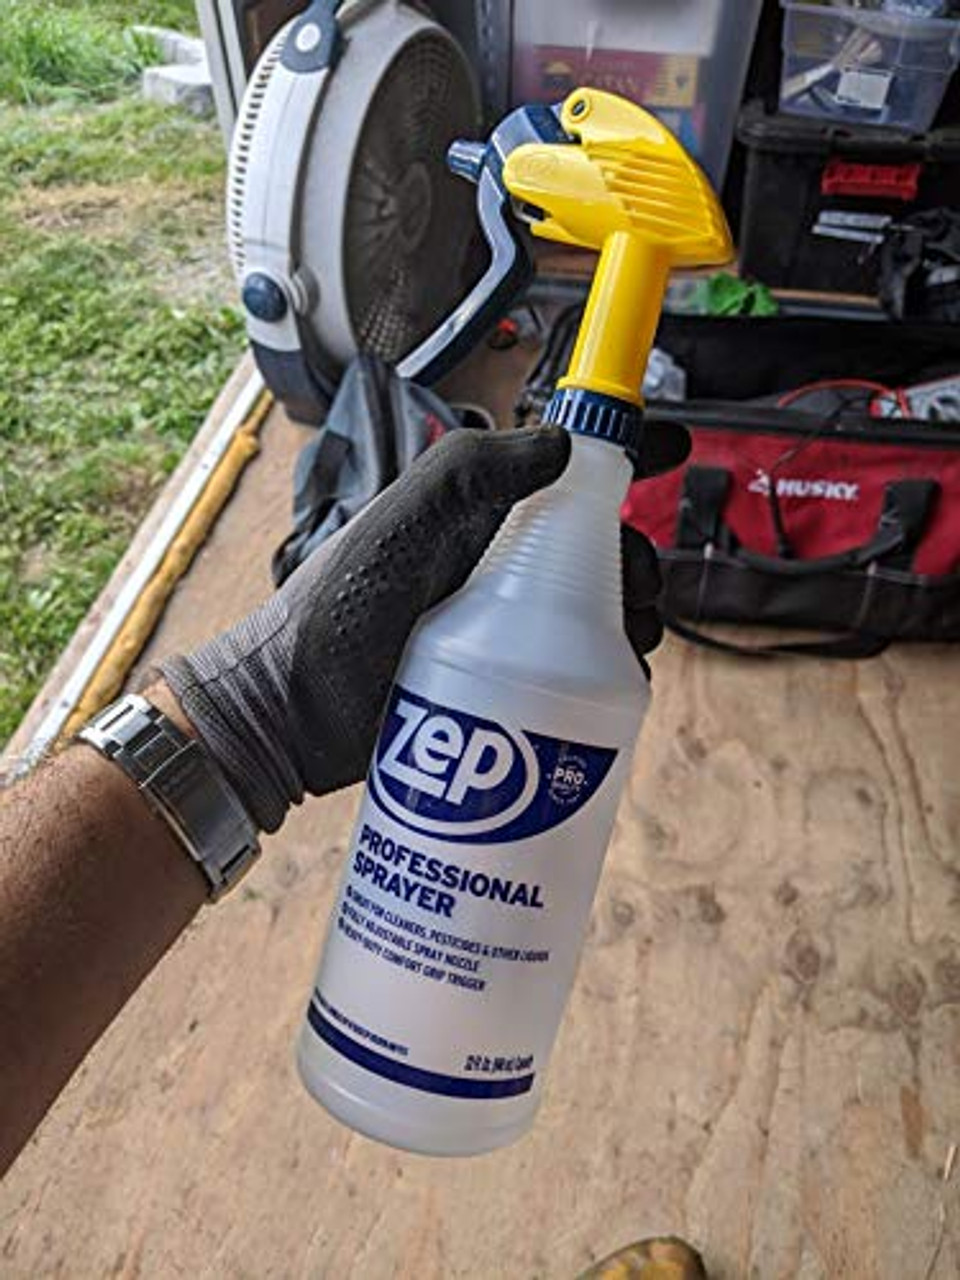 Zep Industrial Sprayer Bottle - 48 Ounces (Case of 8) C32810 - Up to 30 Foot Spray, Adjustable Nozzle